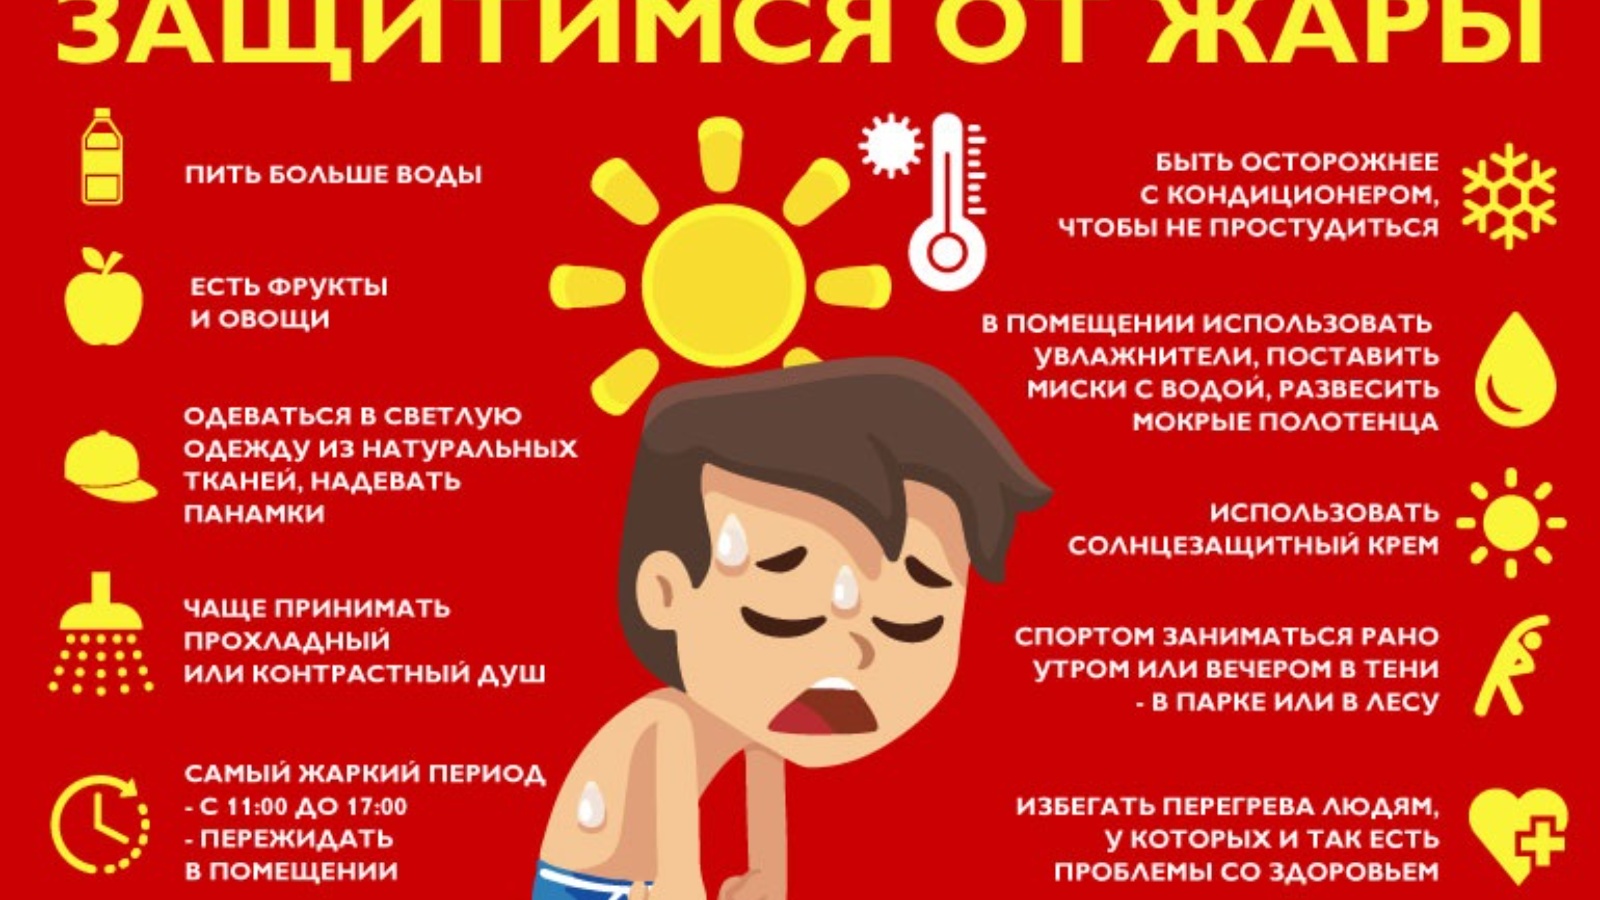 ᐉ как ведет себя щенок в жару? - zoomanji.ru